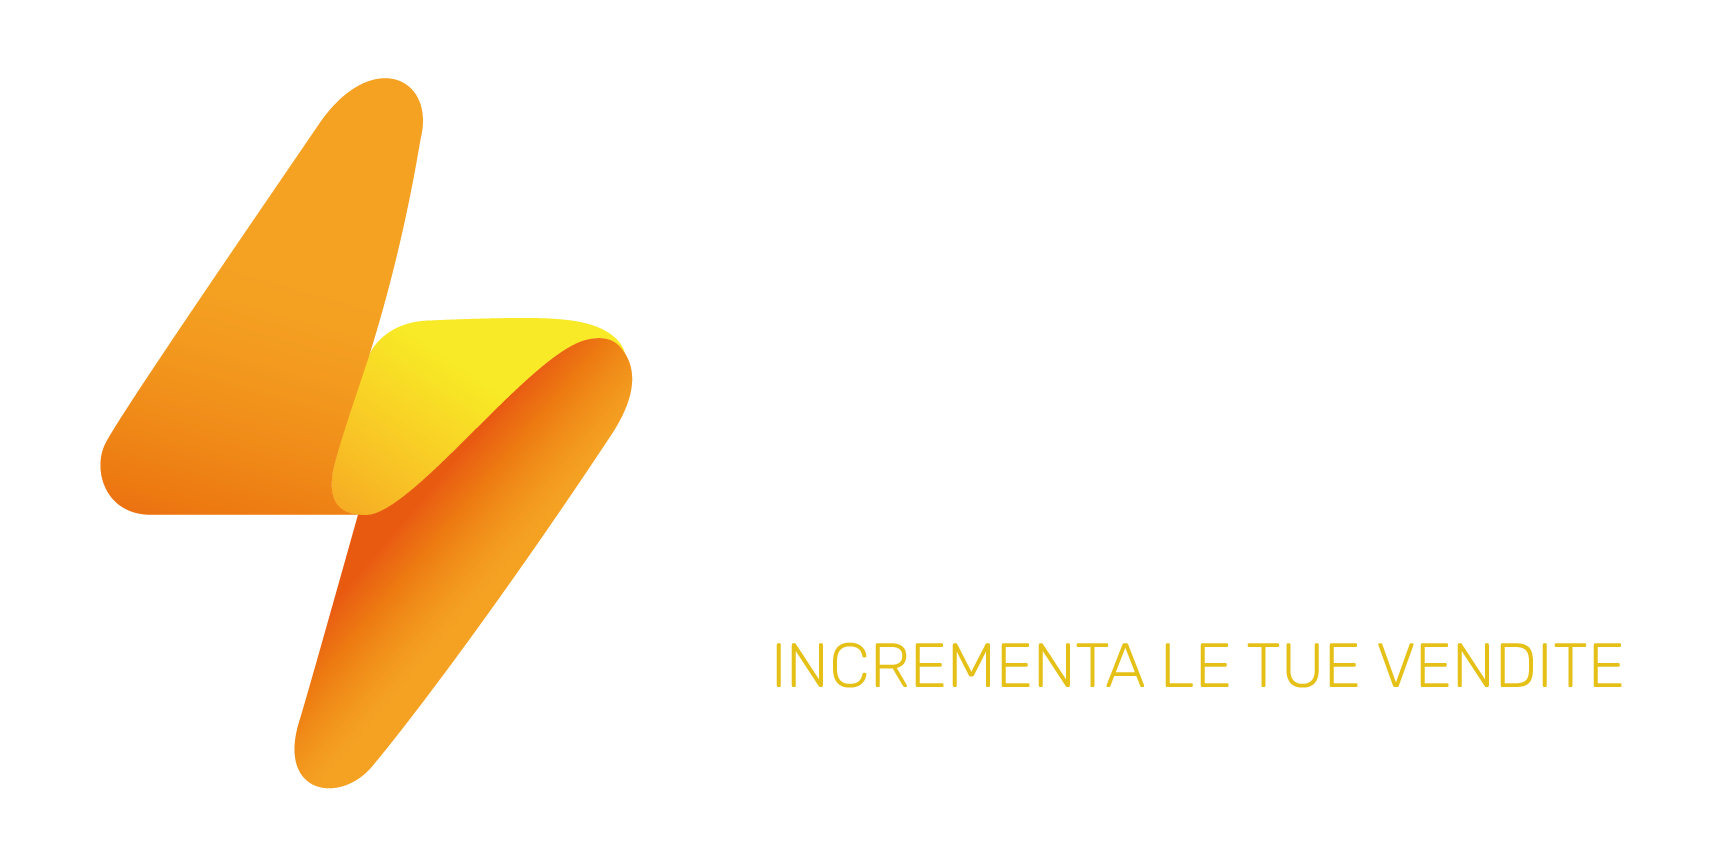 Logo Sales Power